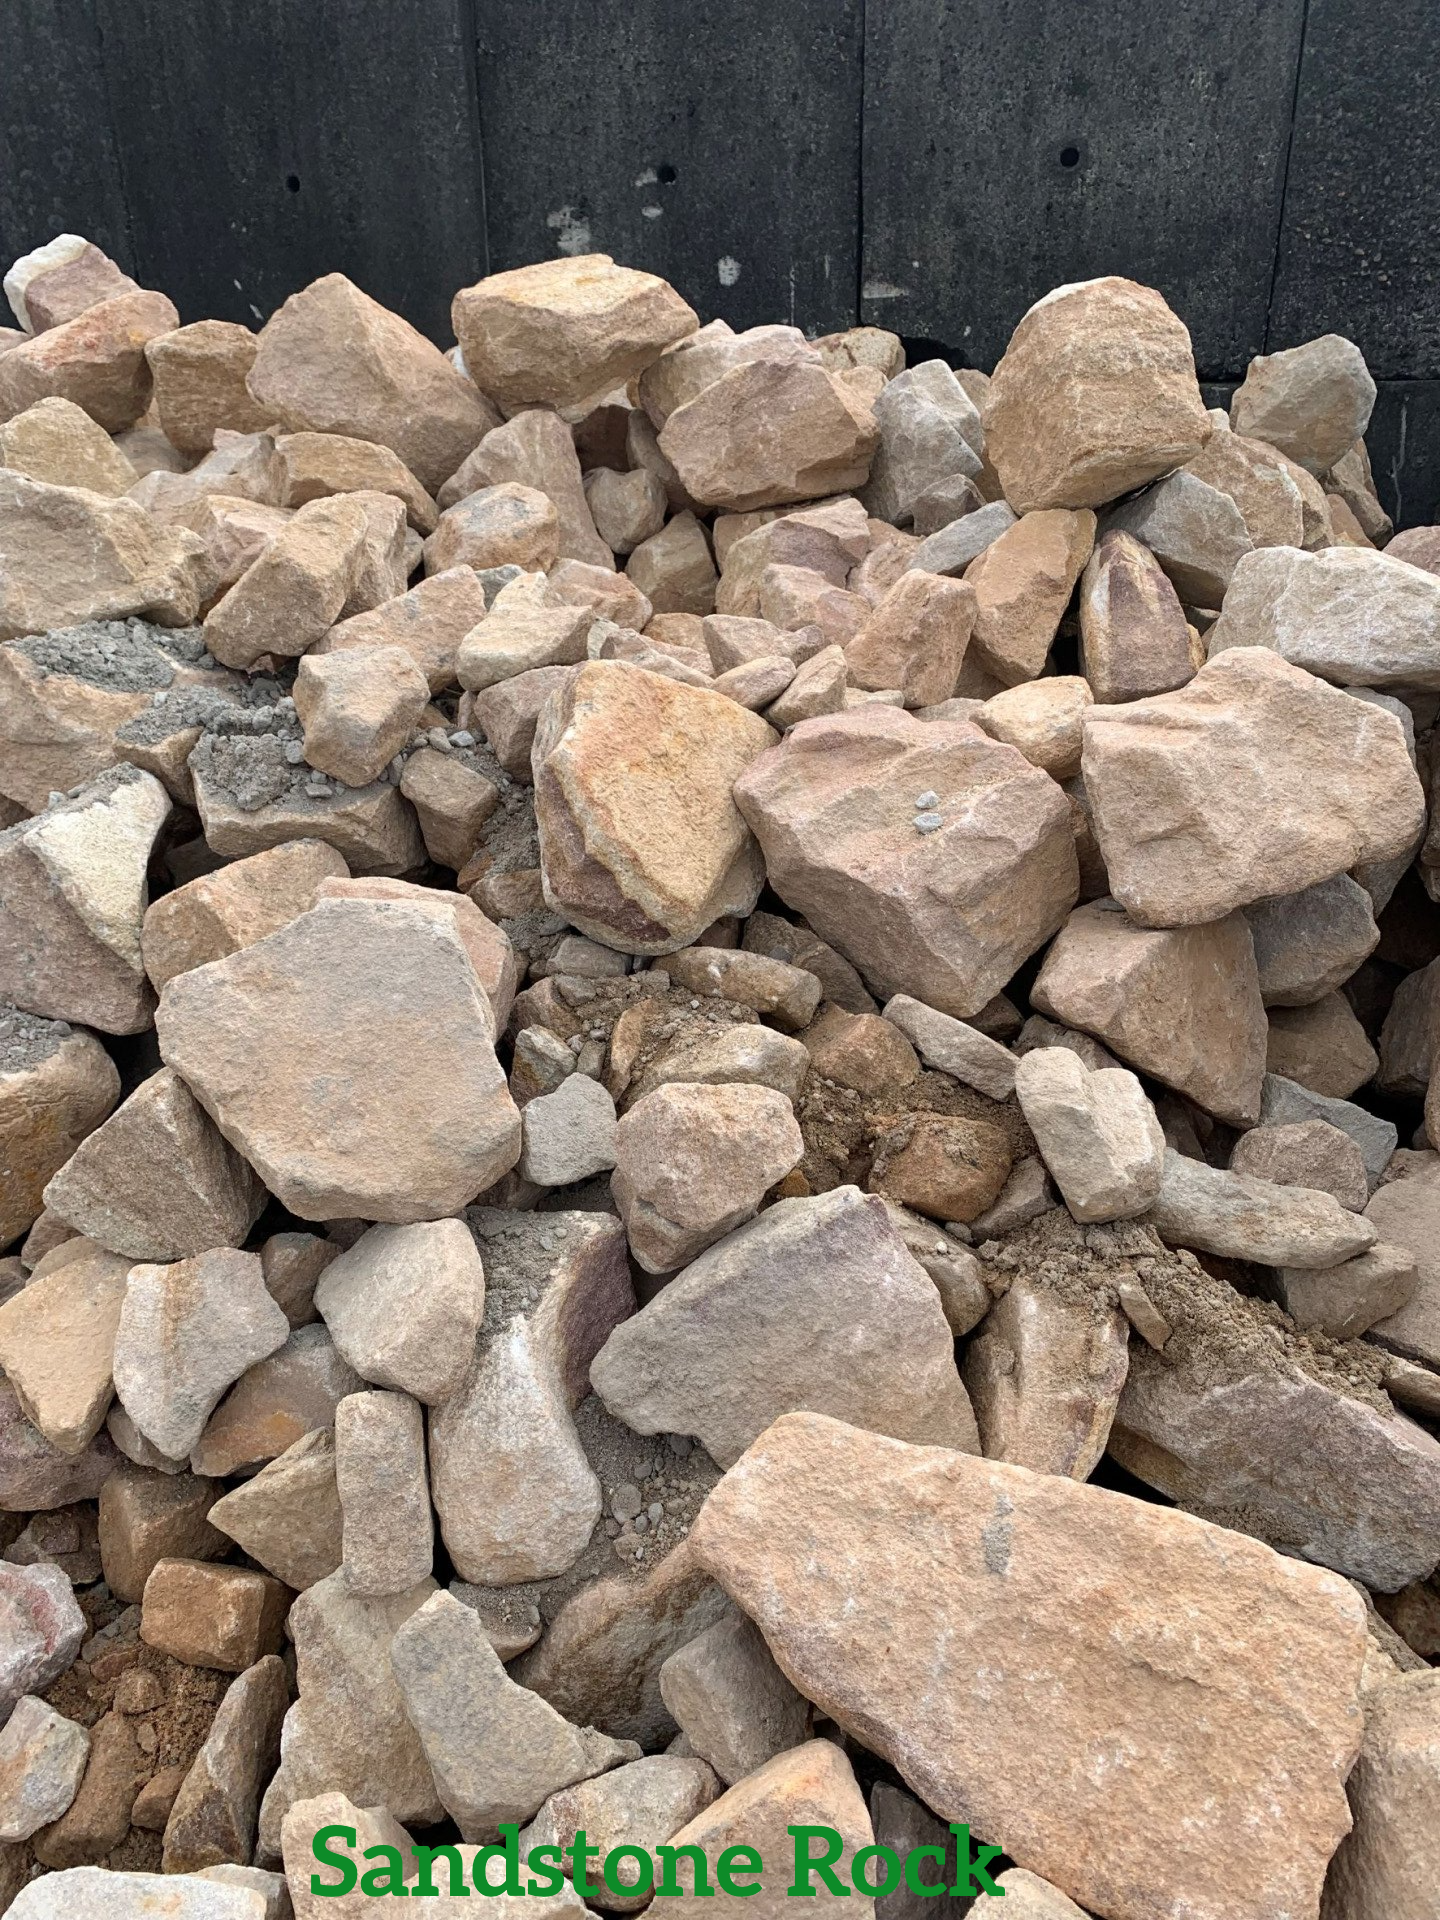 Sandstone Rocks — Landscaping Supplies in Maclean, NSW